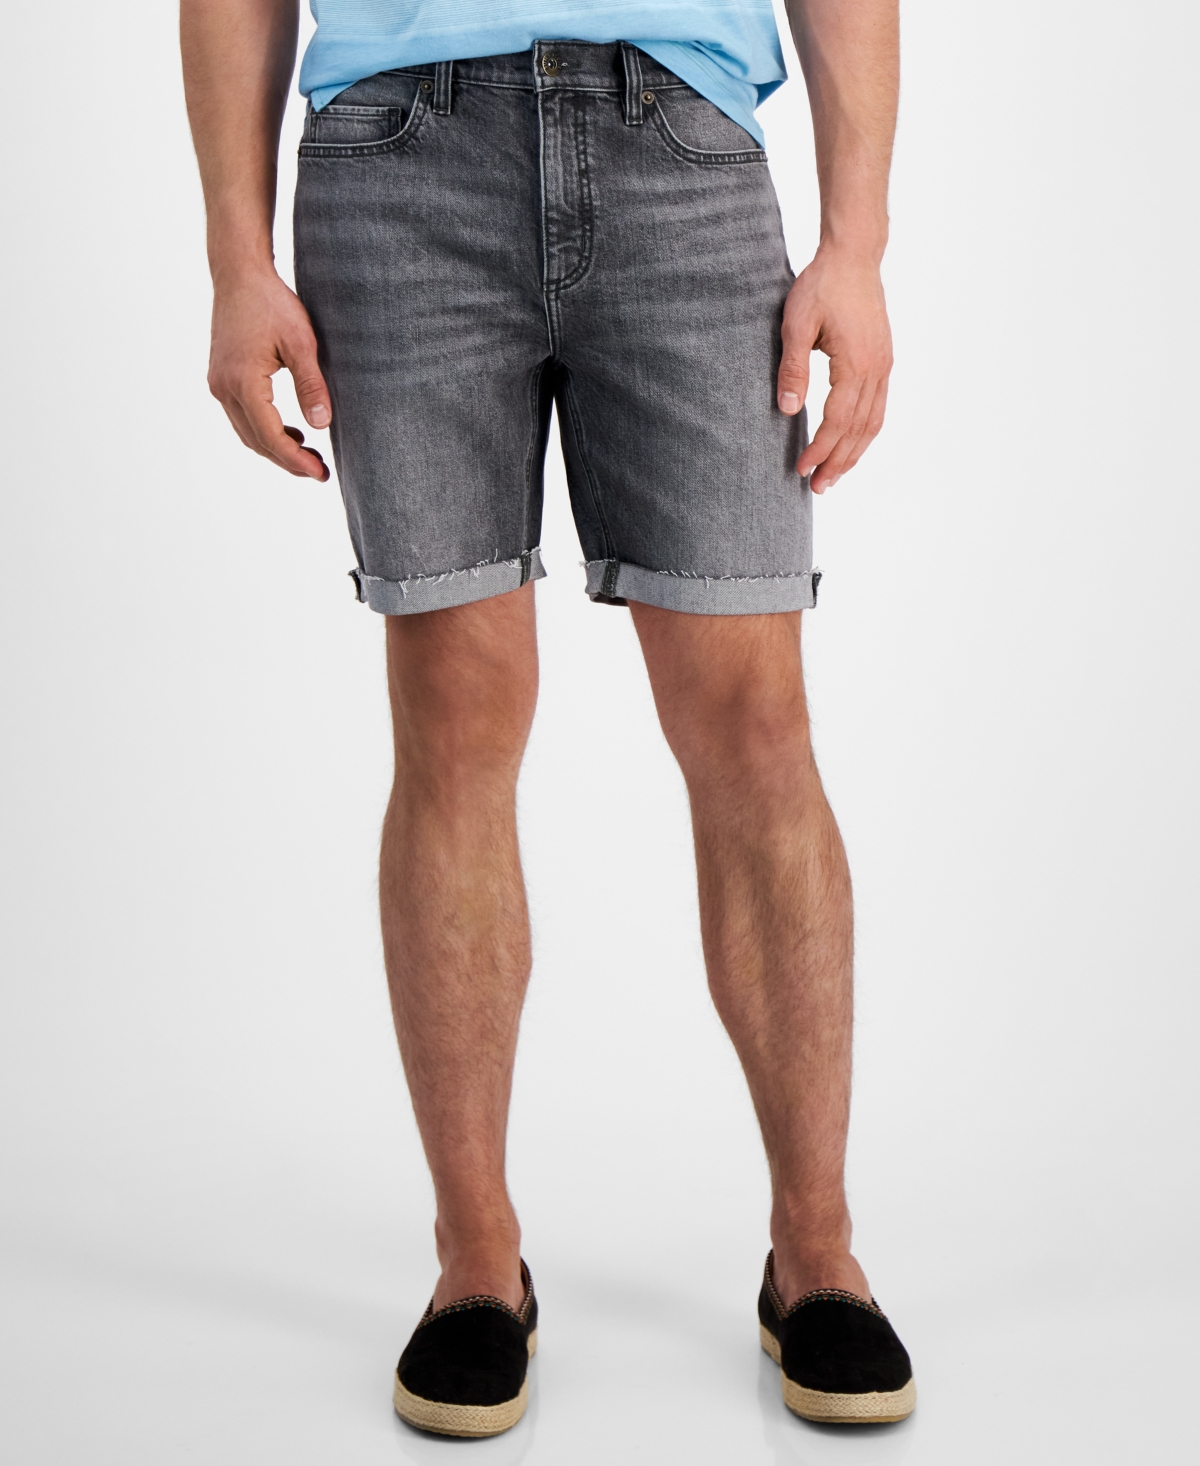 Men's Regular-Fit Denim Shorts, Created for Macy's - Pumice